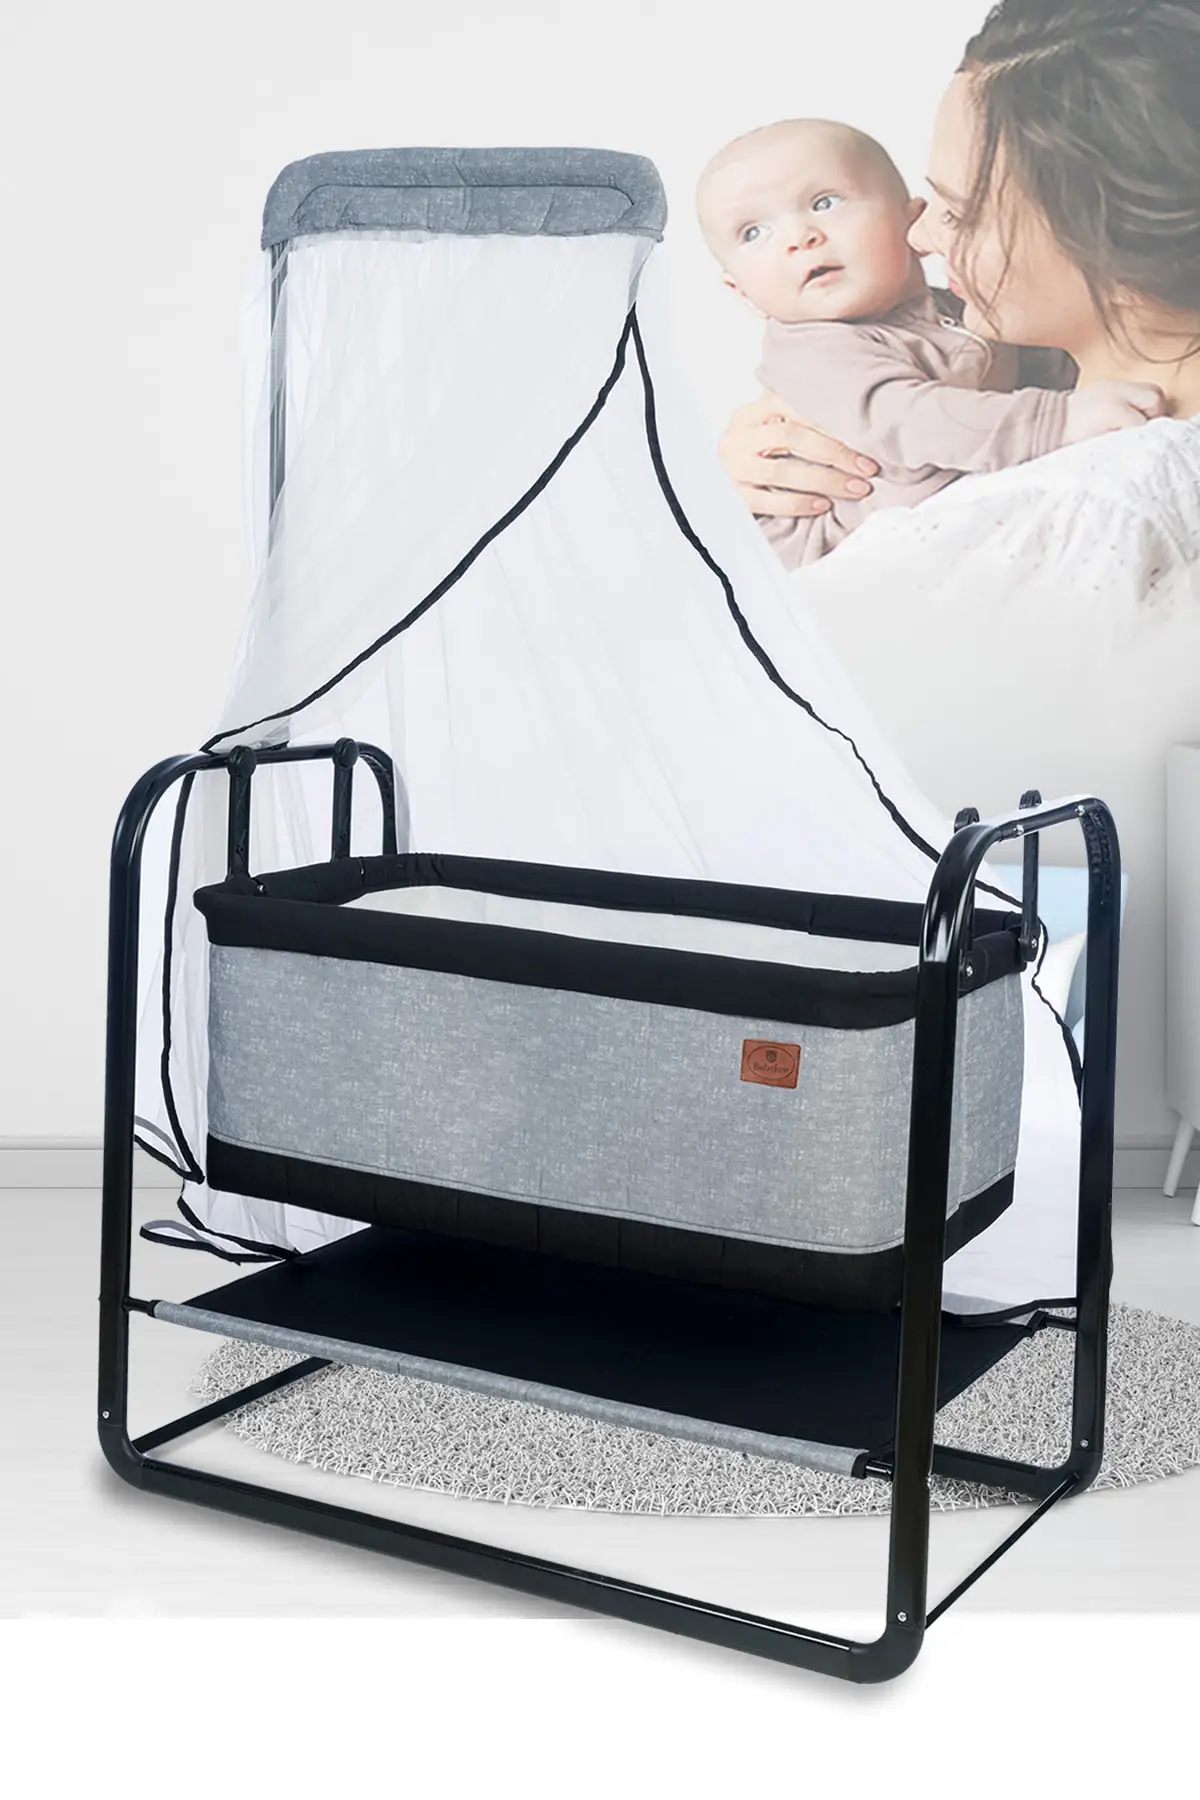 Linen Fabric Profile Be Shaken Portable Mother So Cibinlikli Black Hammock Basket Elegance crib